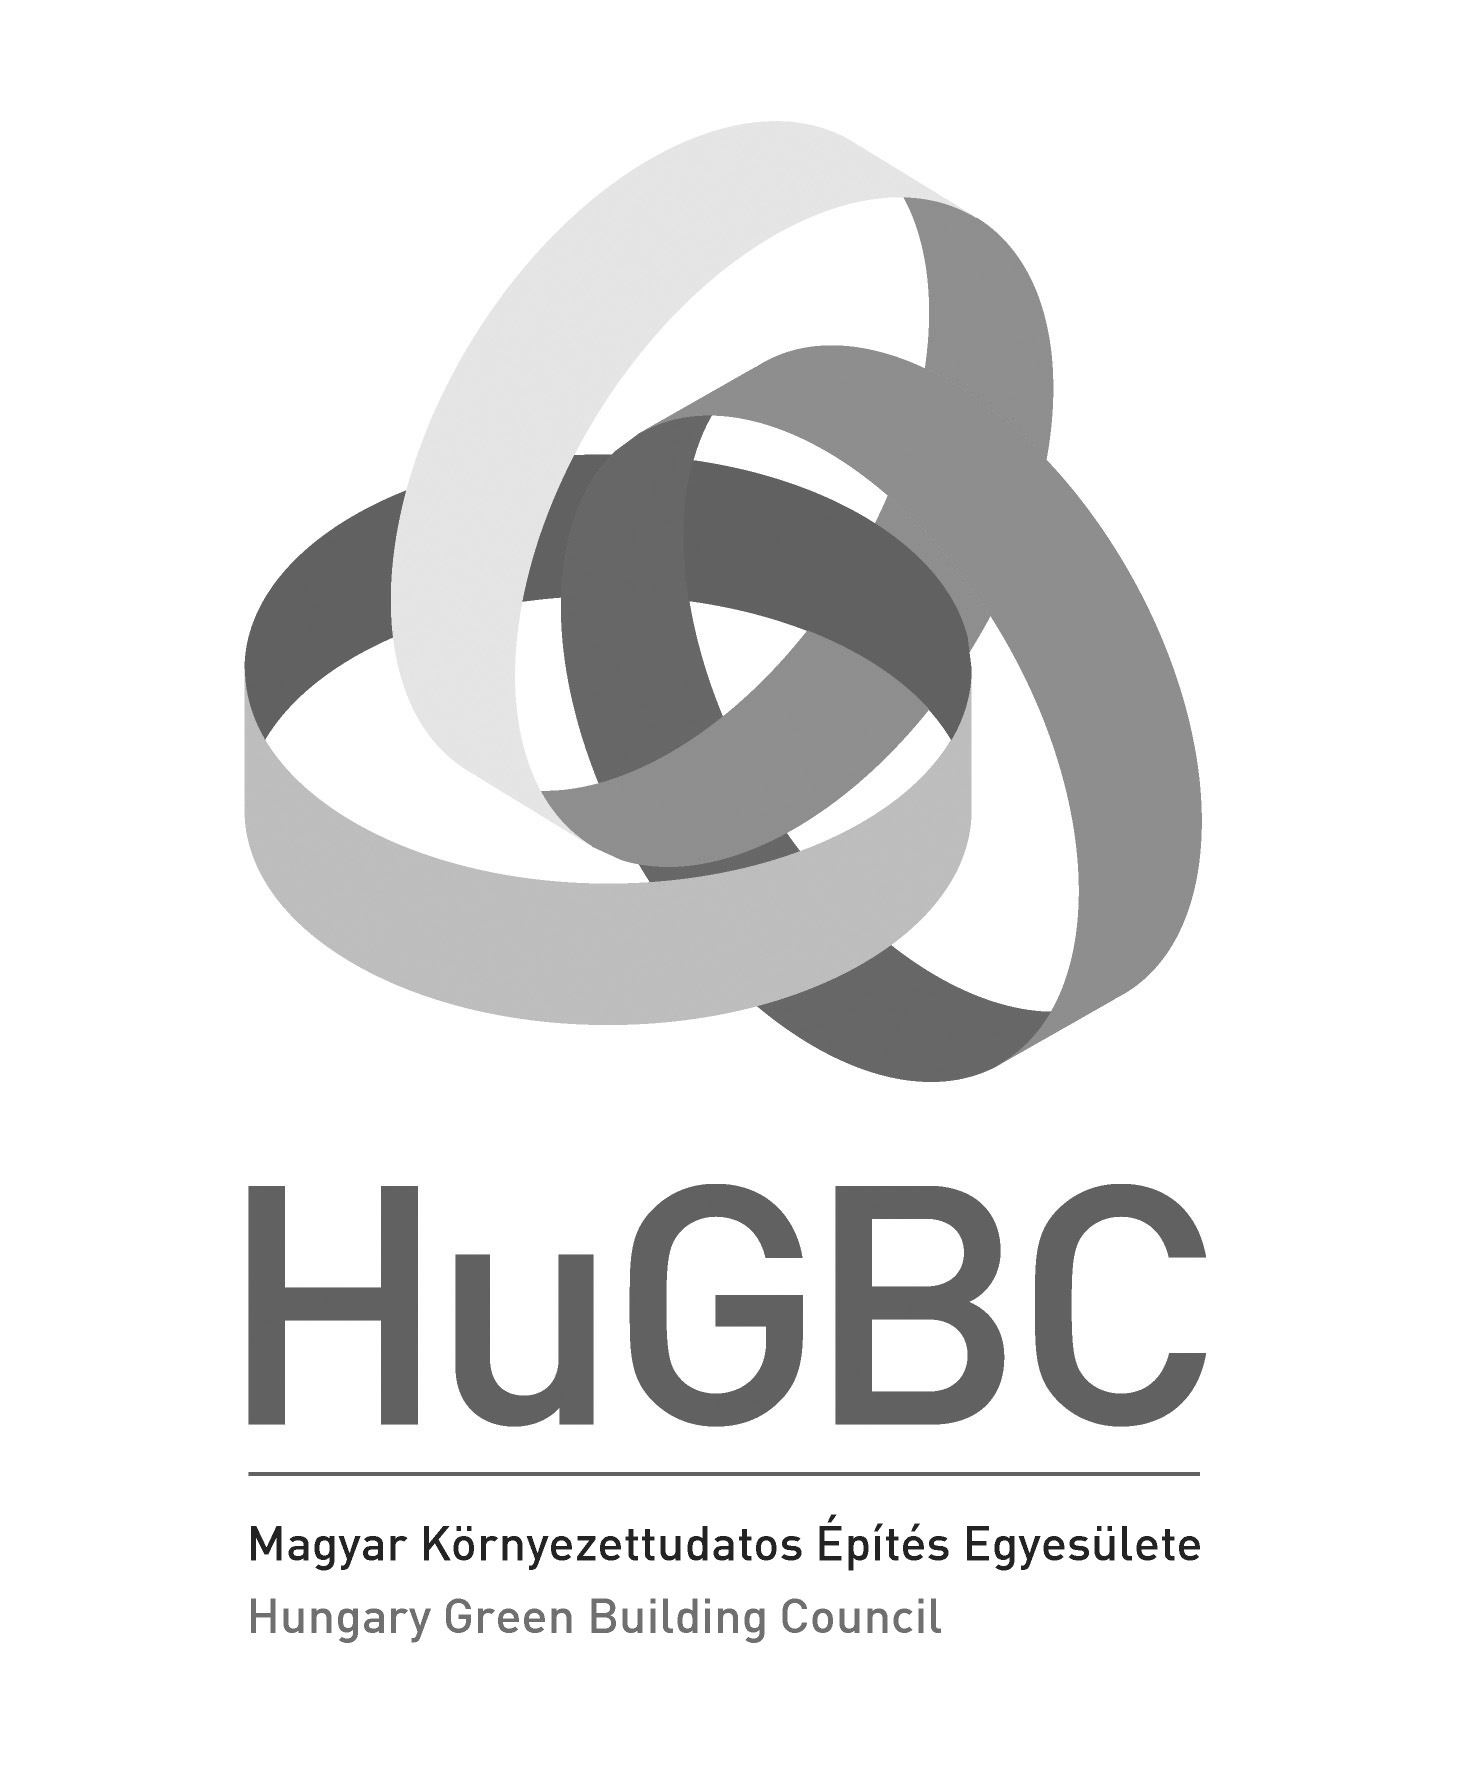 Hungary Green Building Council